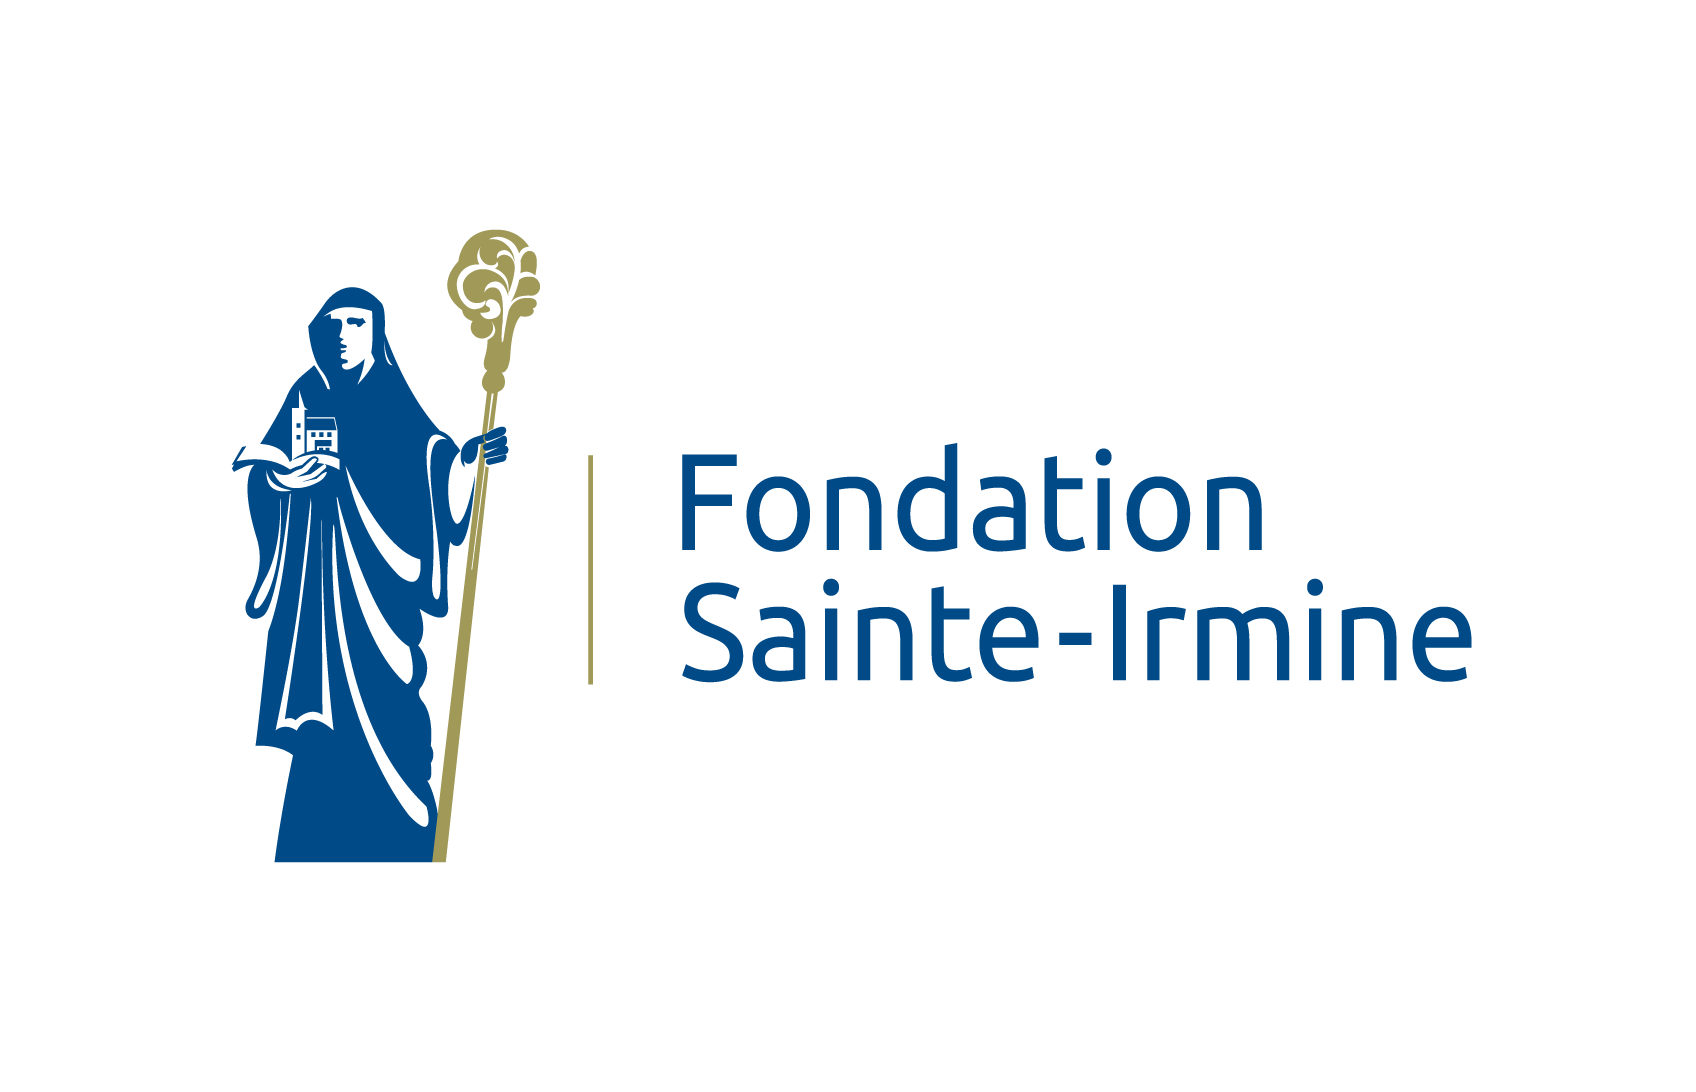 Fondation Sainte-Irmine